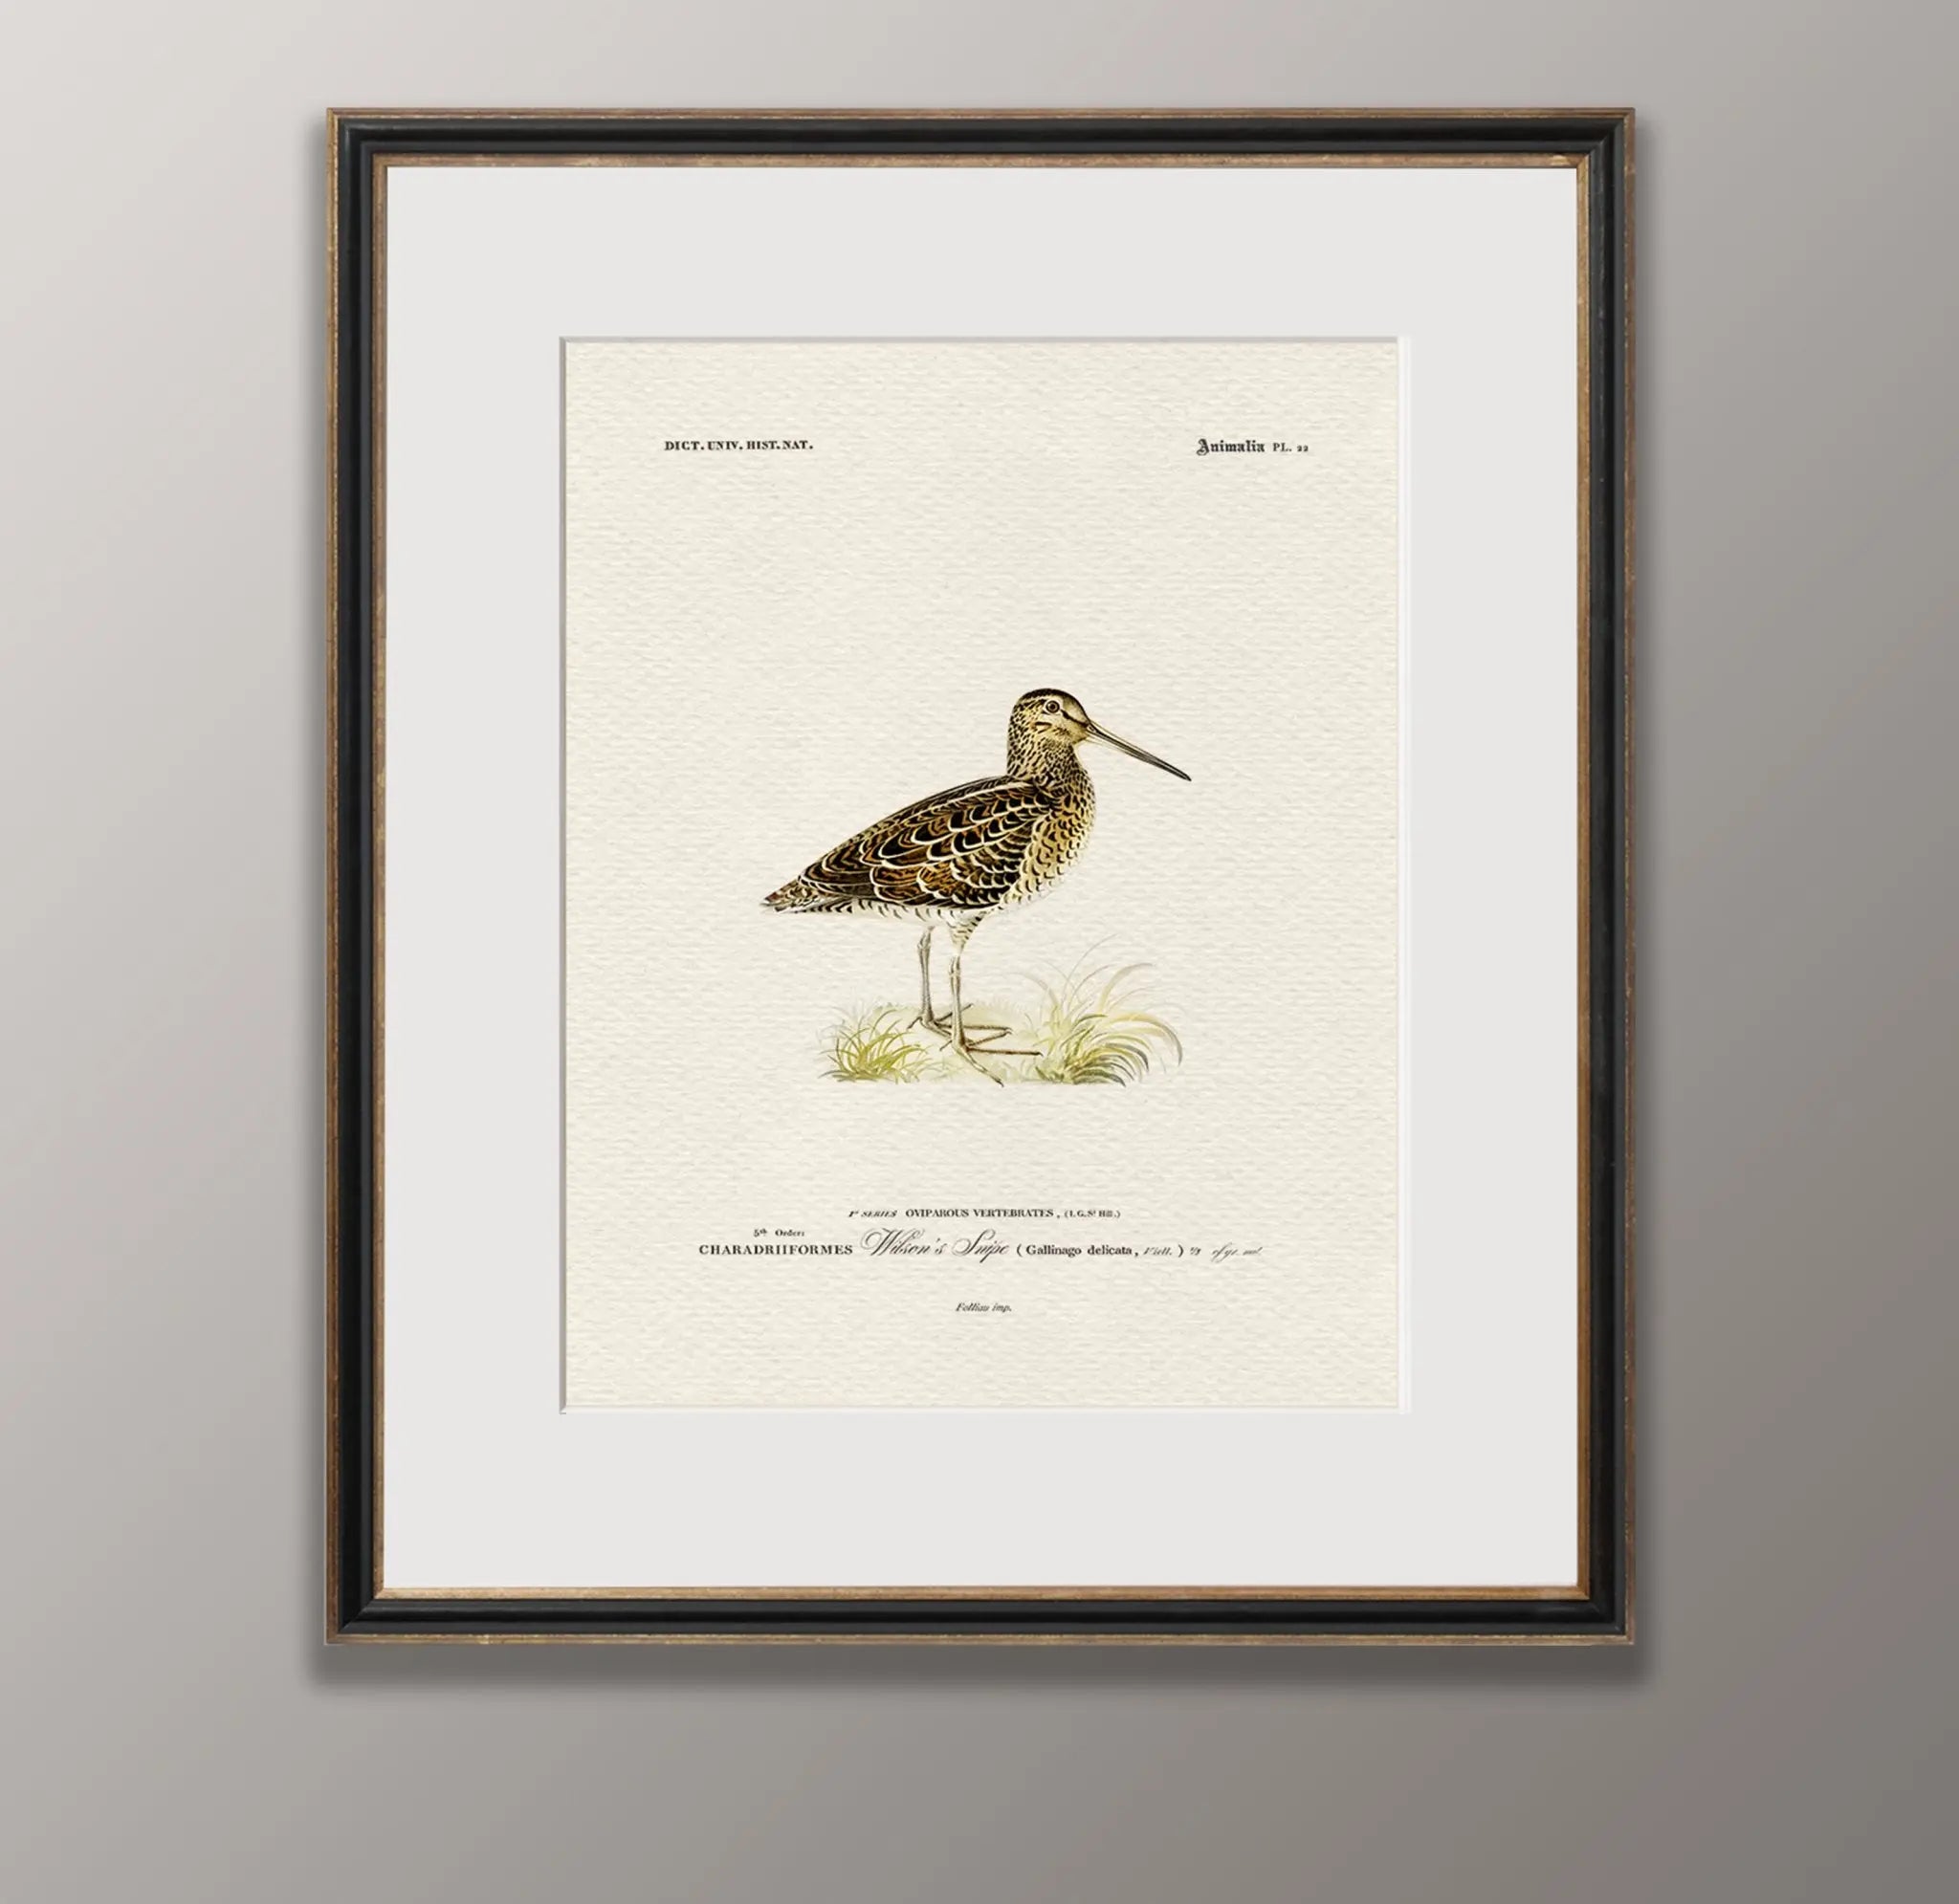 Vintage Naturalist Illustrations: North American Game Birds - Emblem Atelier